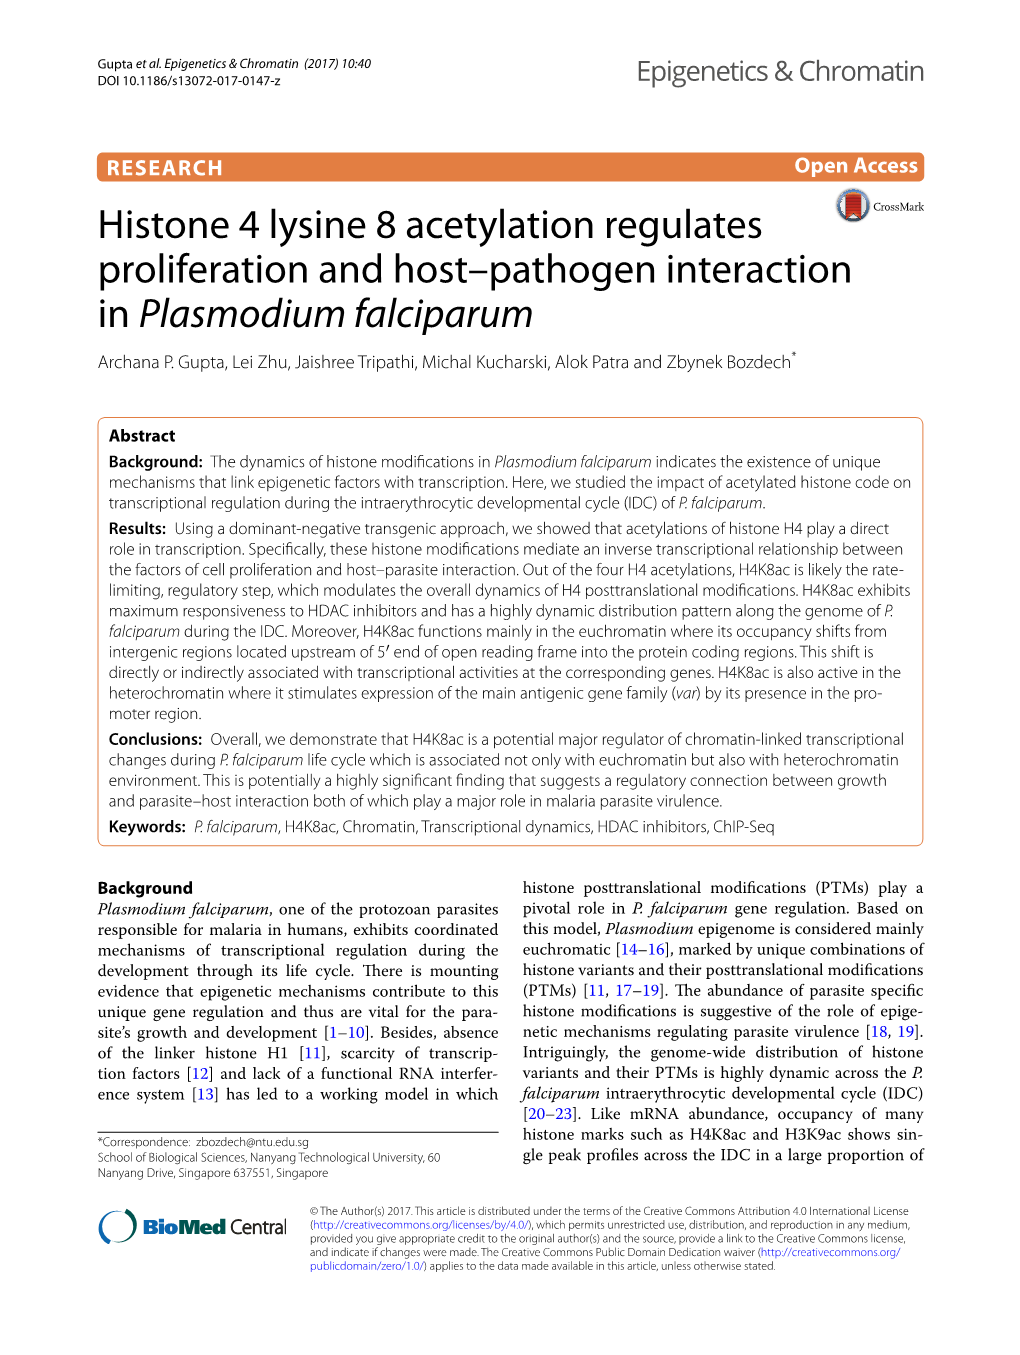 Histone 4 Lysine 8 Acetylation Regulates Proliferation and Host–Pathogen Interaction in Plasmodium Falciparum Archana P